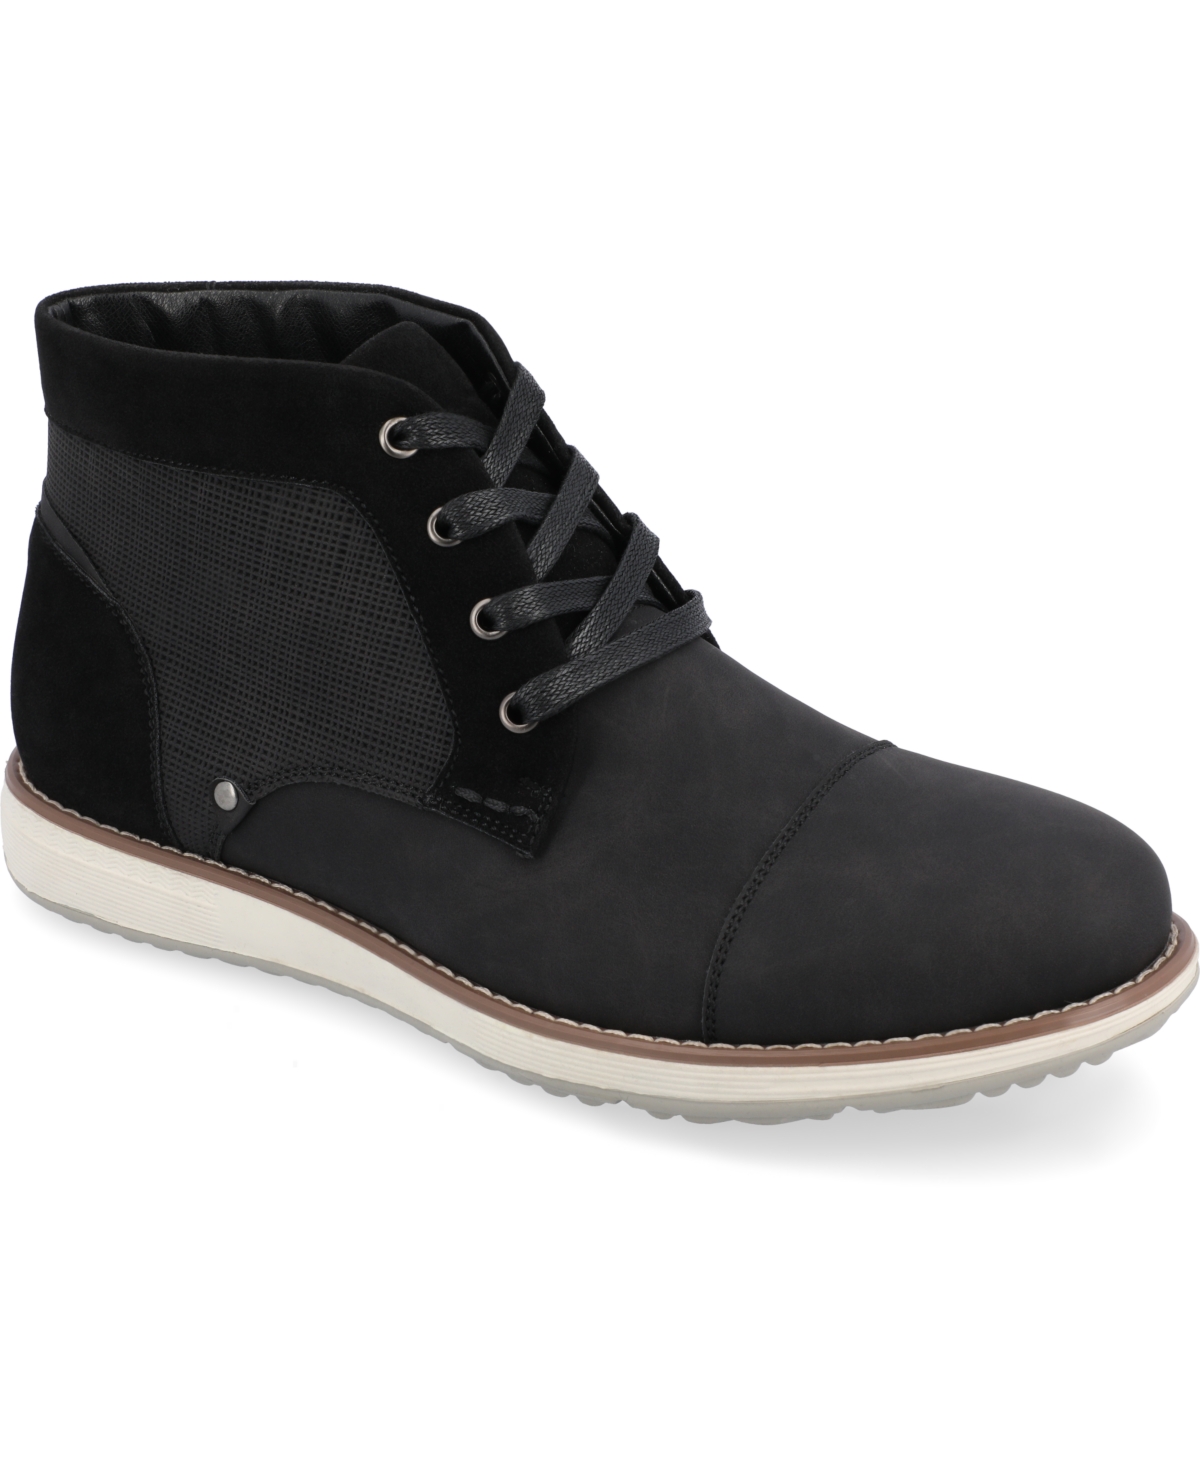 Men's Austin Wide Width Tru Comfort Foam Lace-Up Cap Toe Chukka Boots - Black